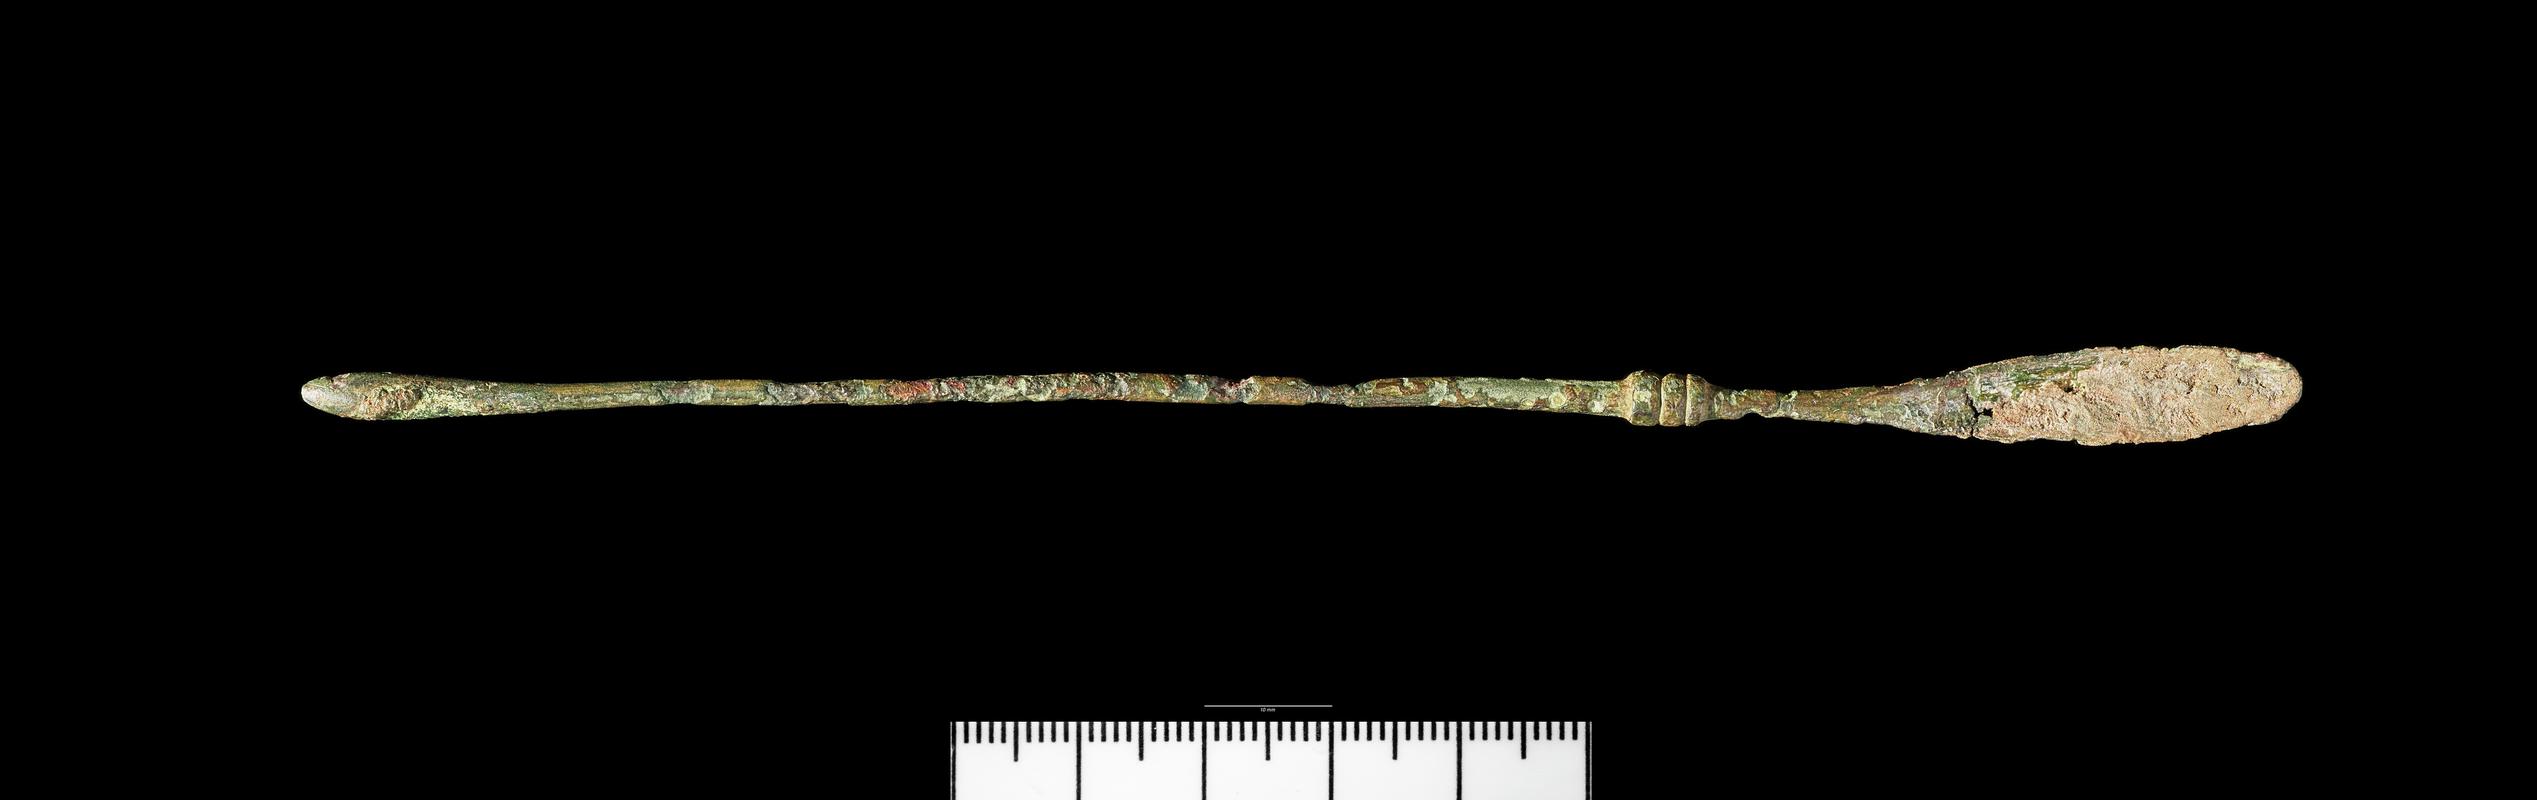 Roman copper alloy spatula probe, Ointment spoon and probe, Ligula (mixing stick)